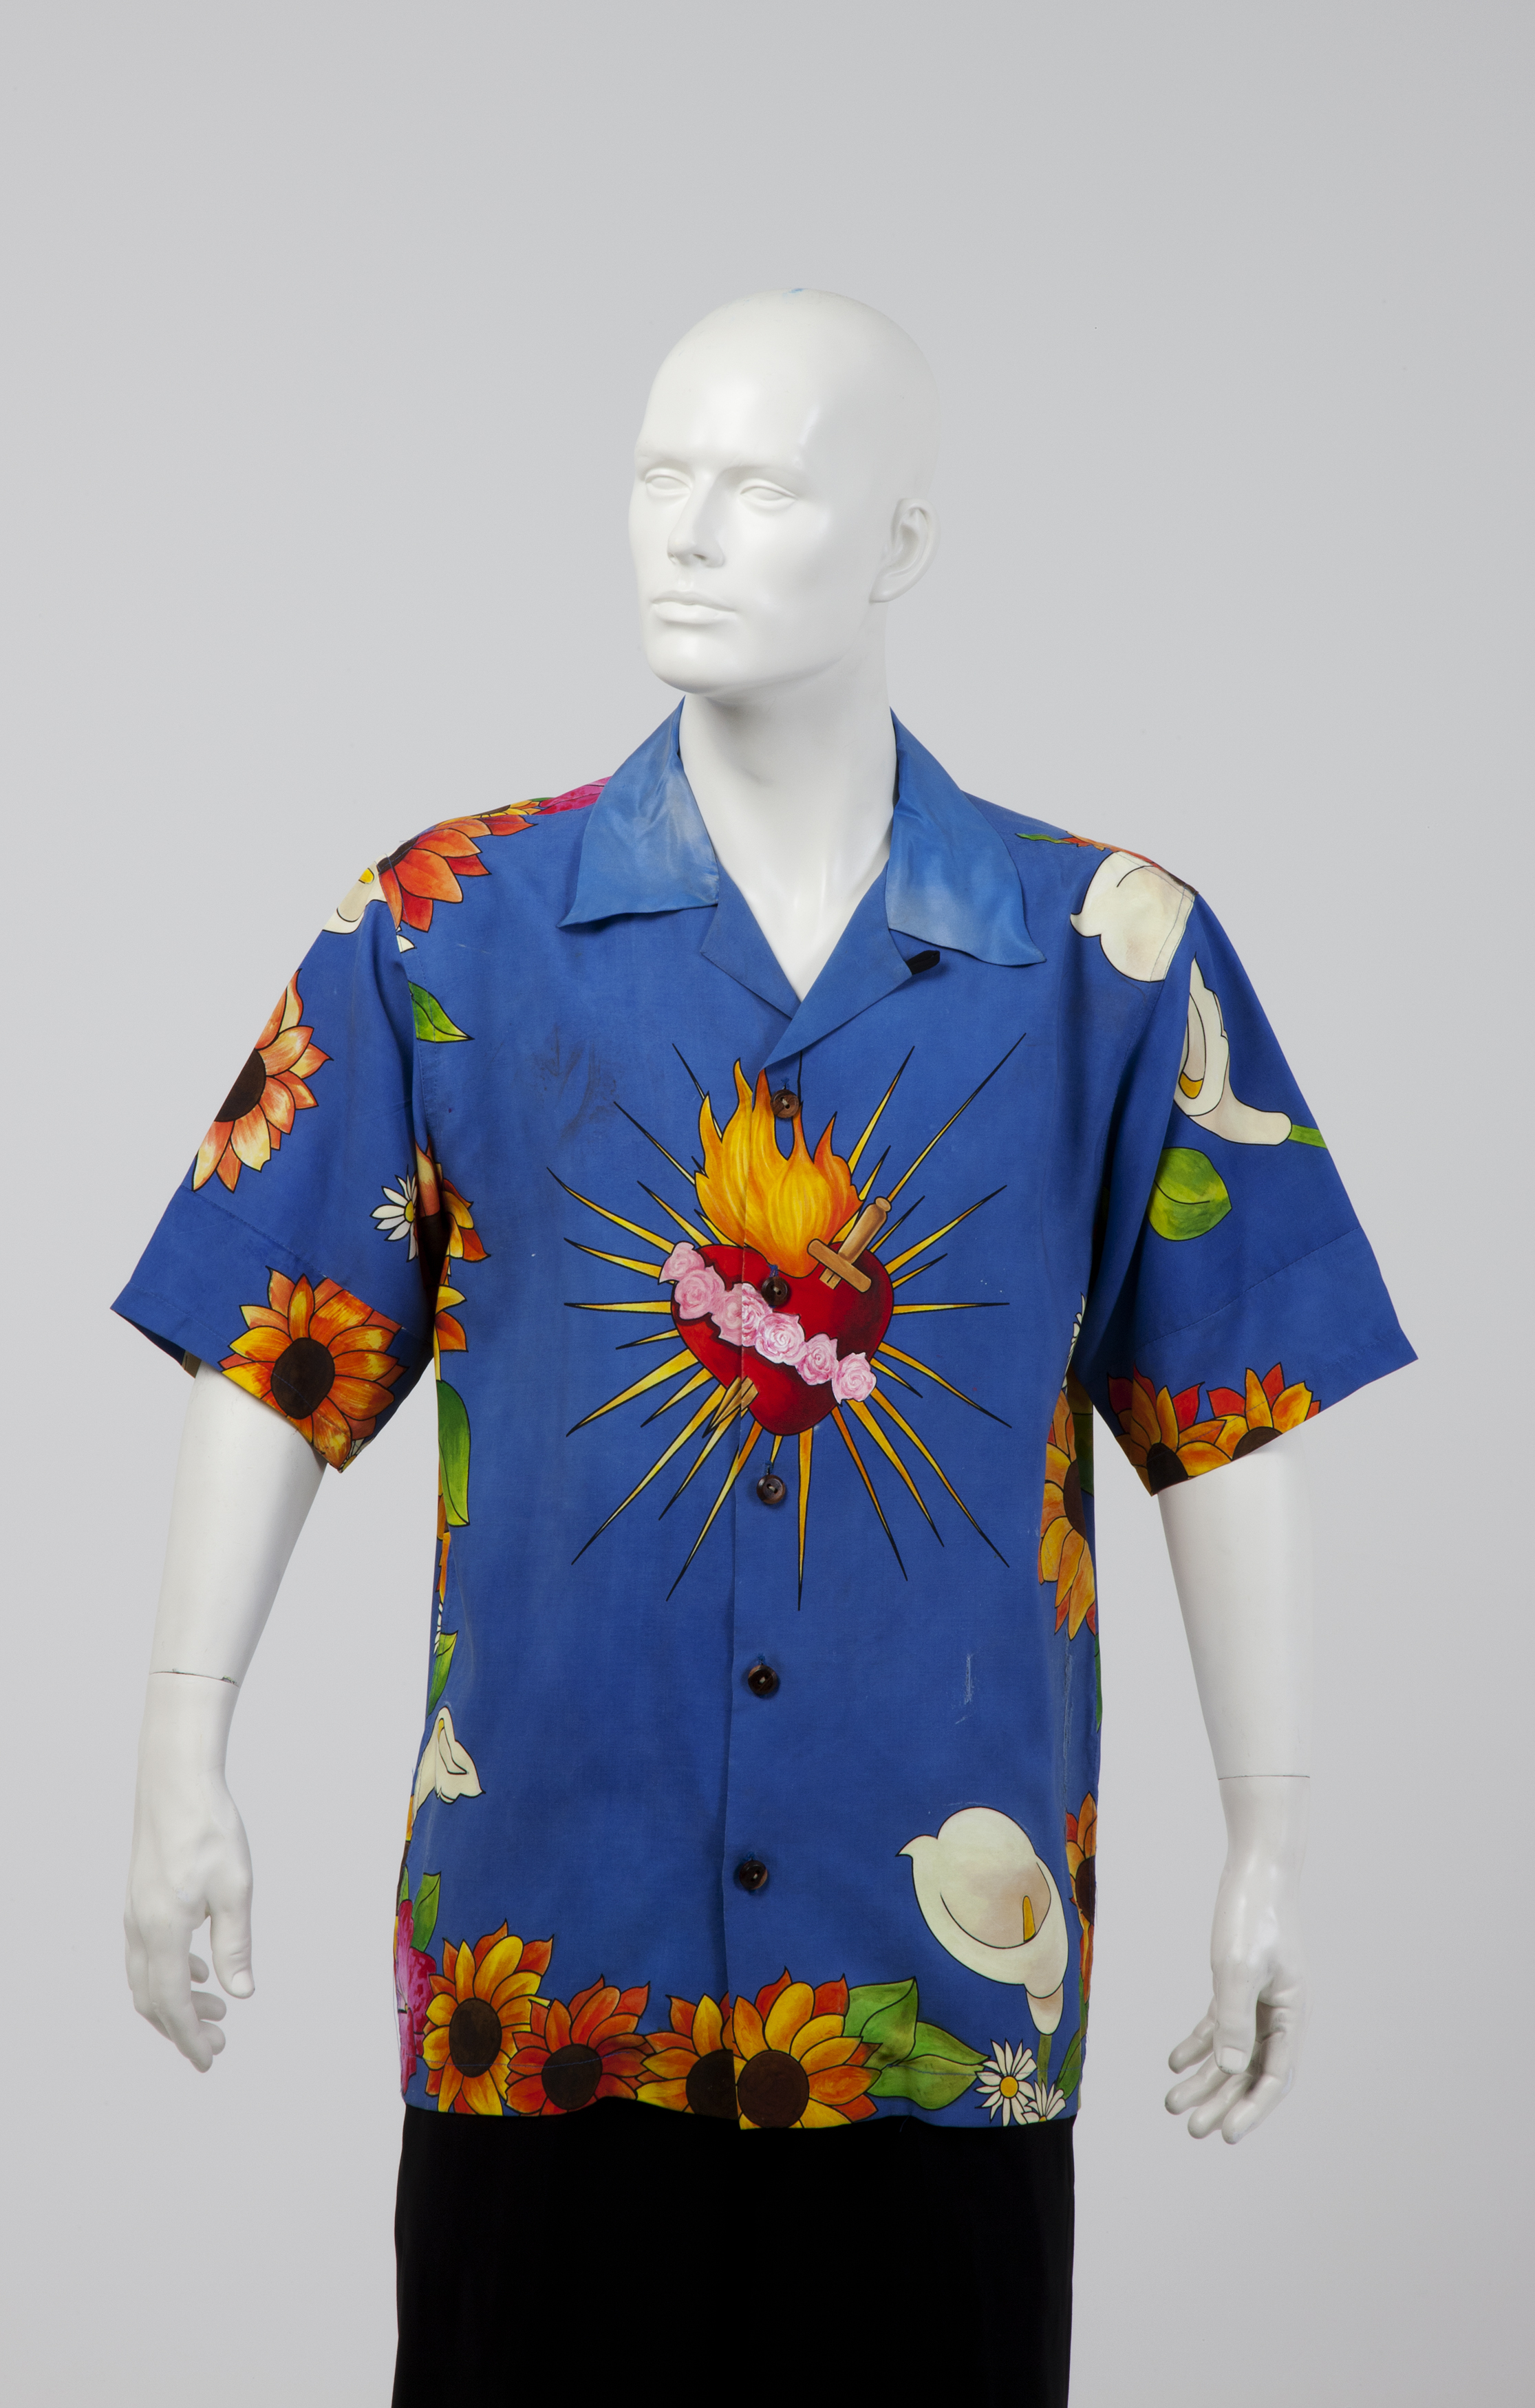 Hawaiian shirt from 'Romeo + Juliet' worn by Leonardo DiCaprio